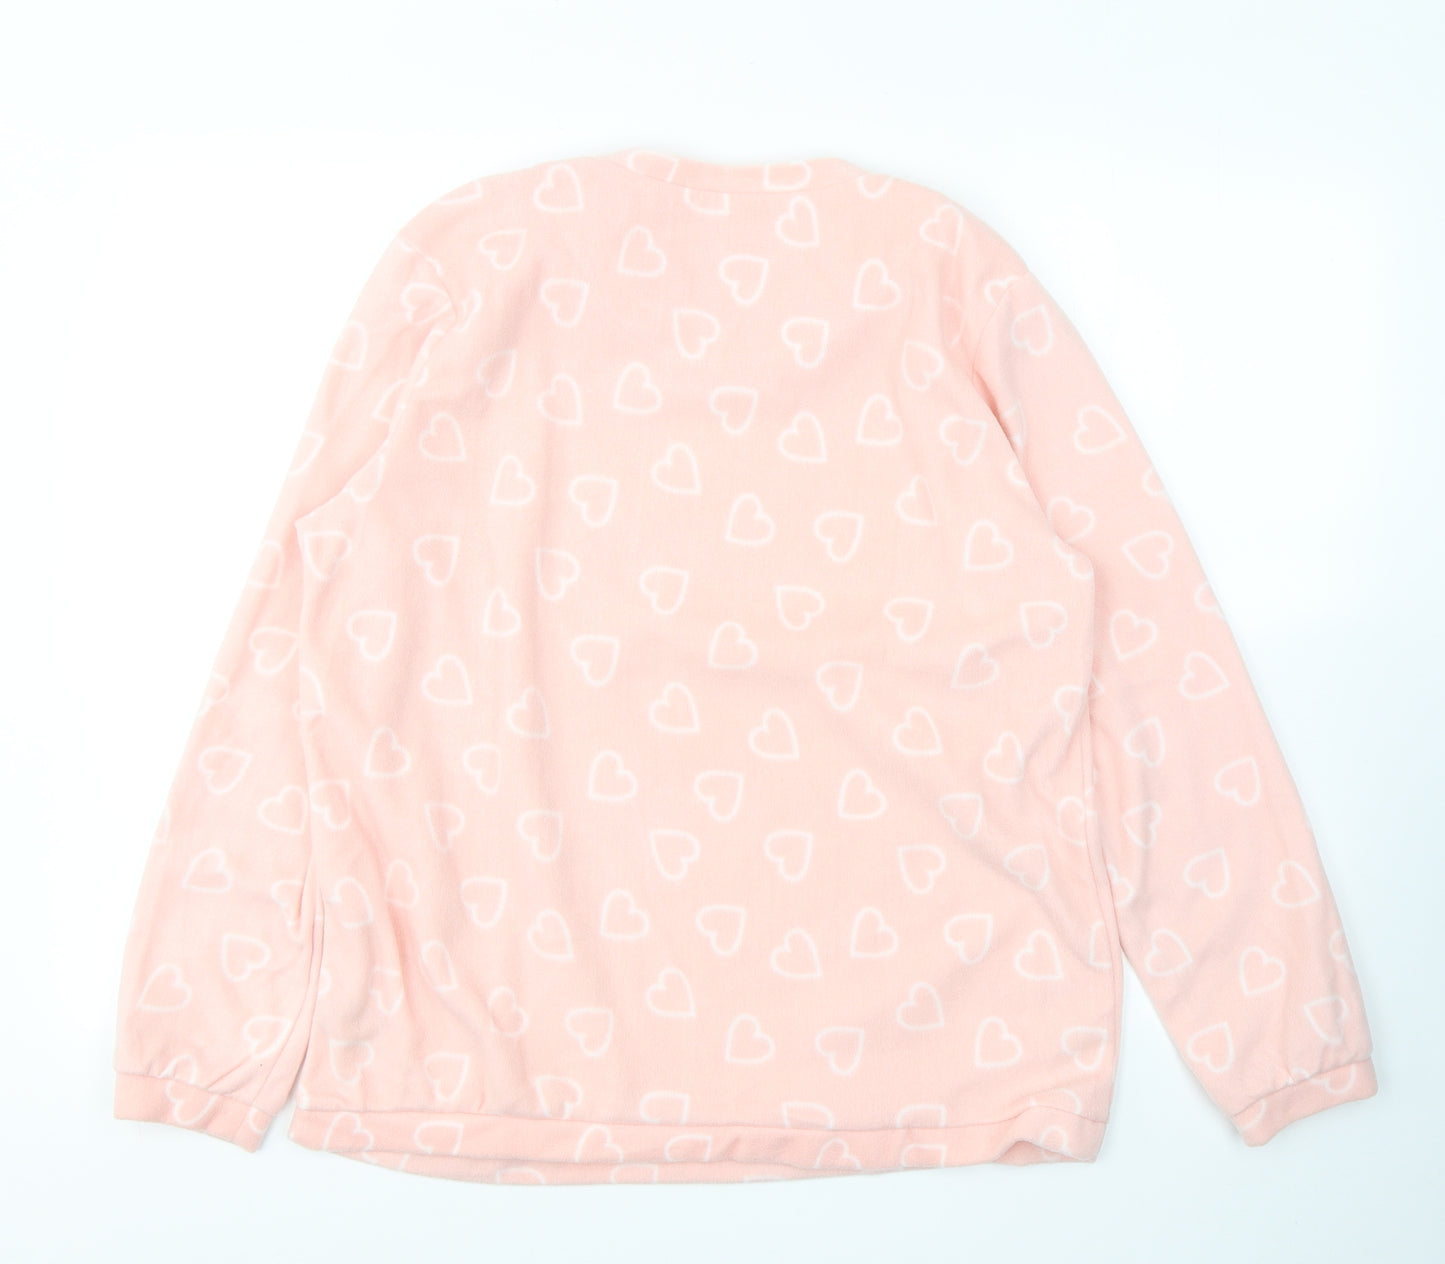 Primark Womens Pink Geometric Polyester Top Pyjama Top Size M